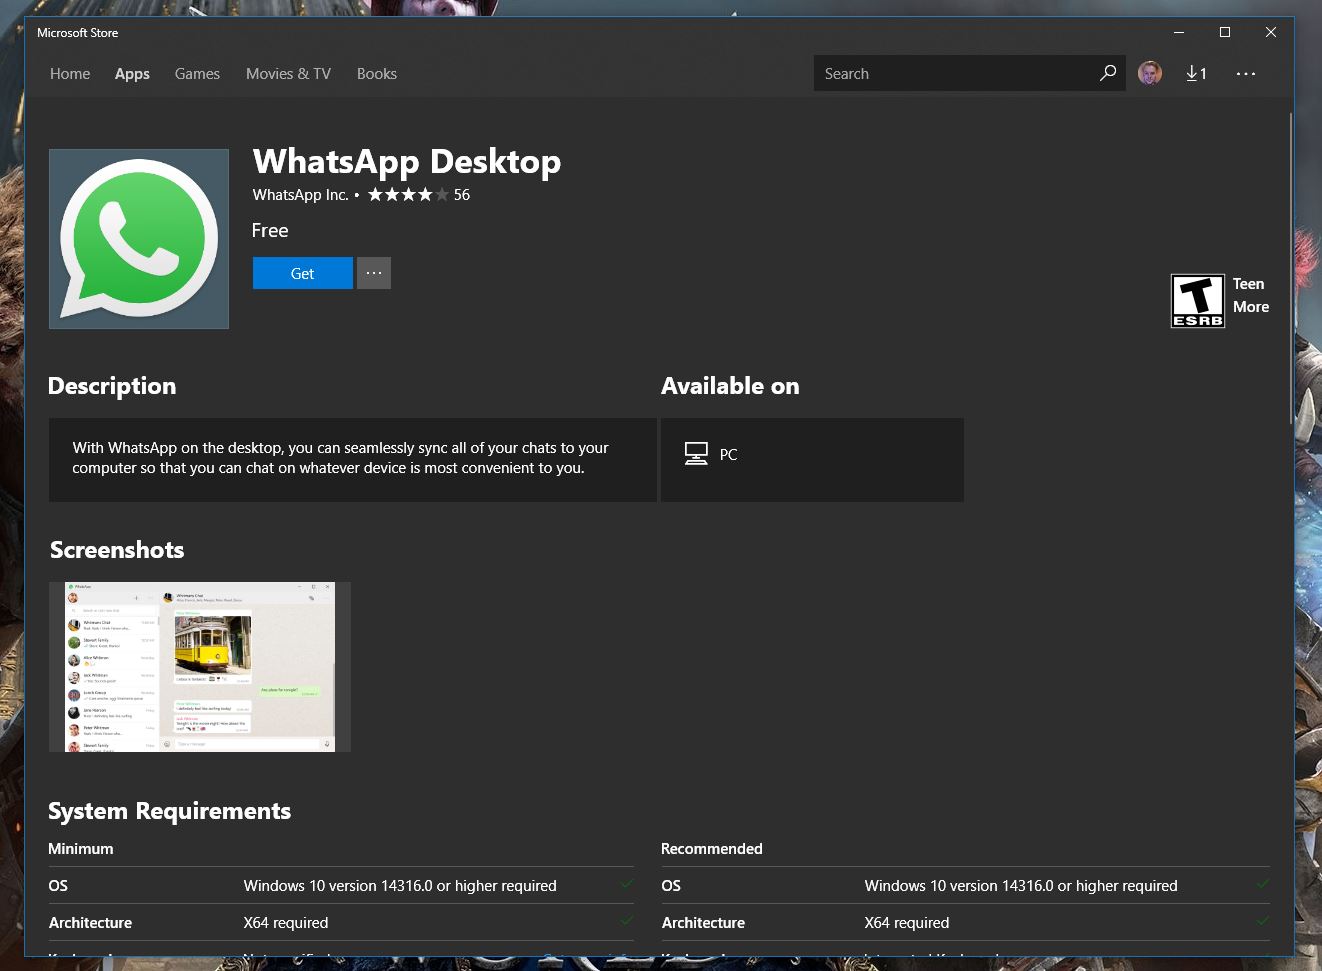 whatsapp-desktop-microsoft-store-screenshot.jpg